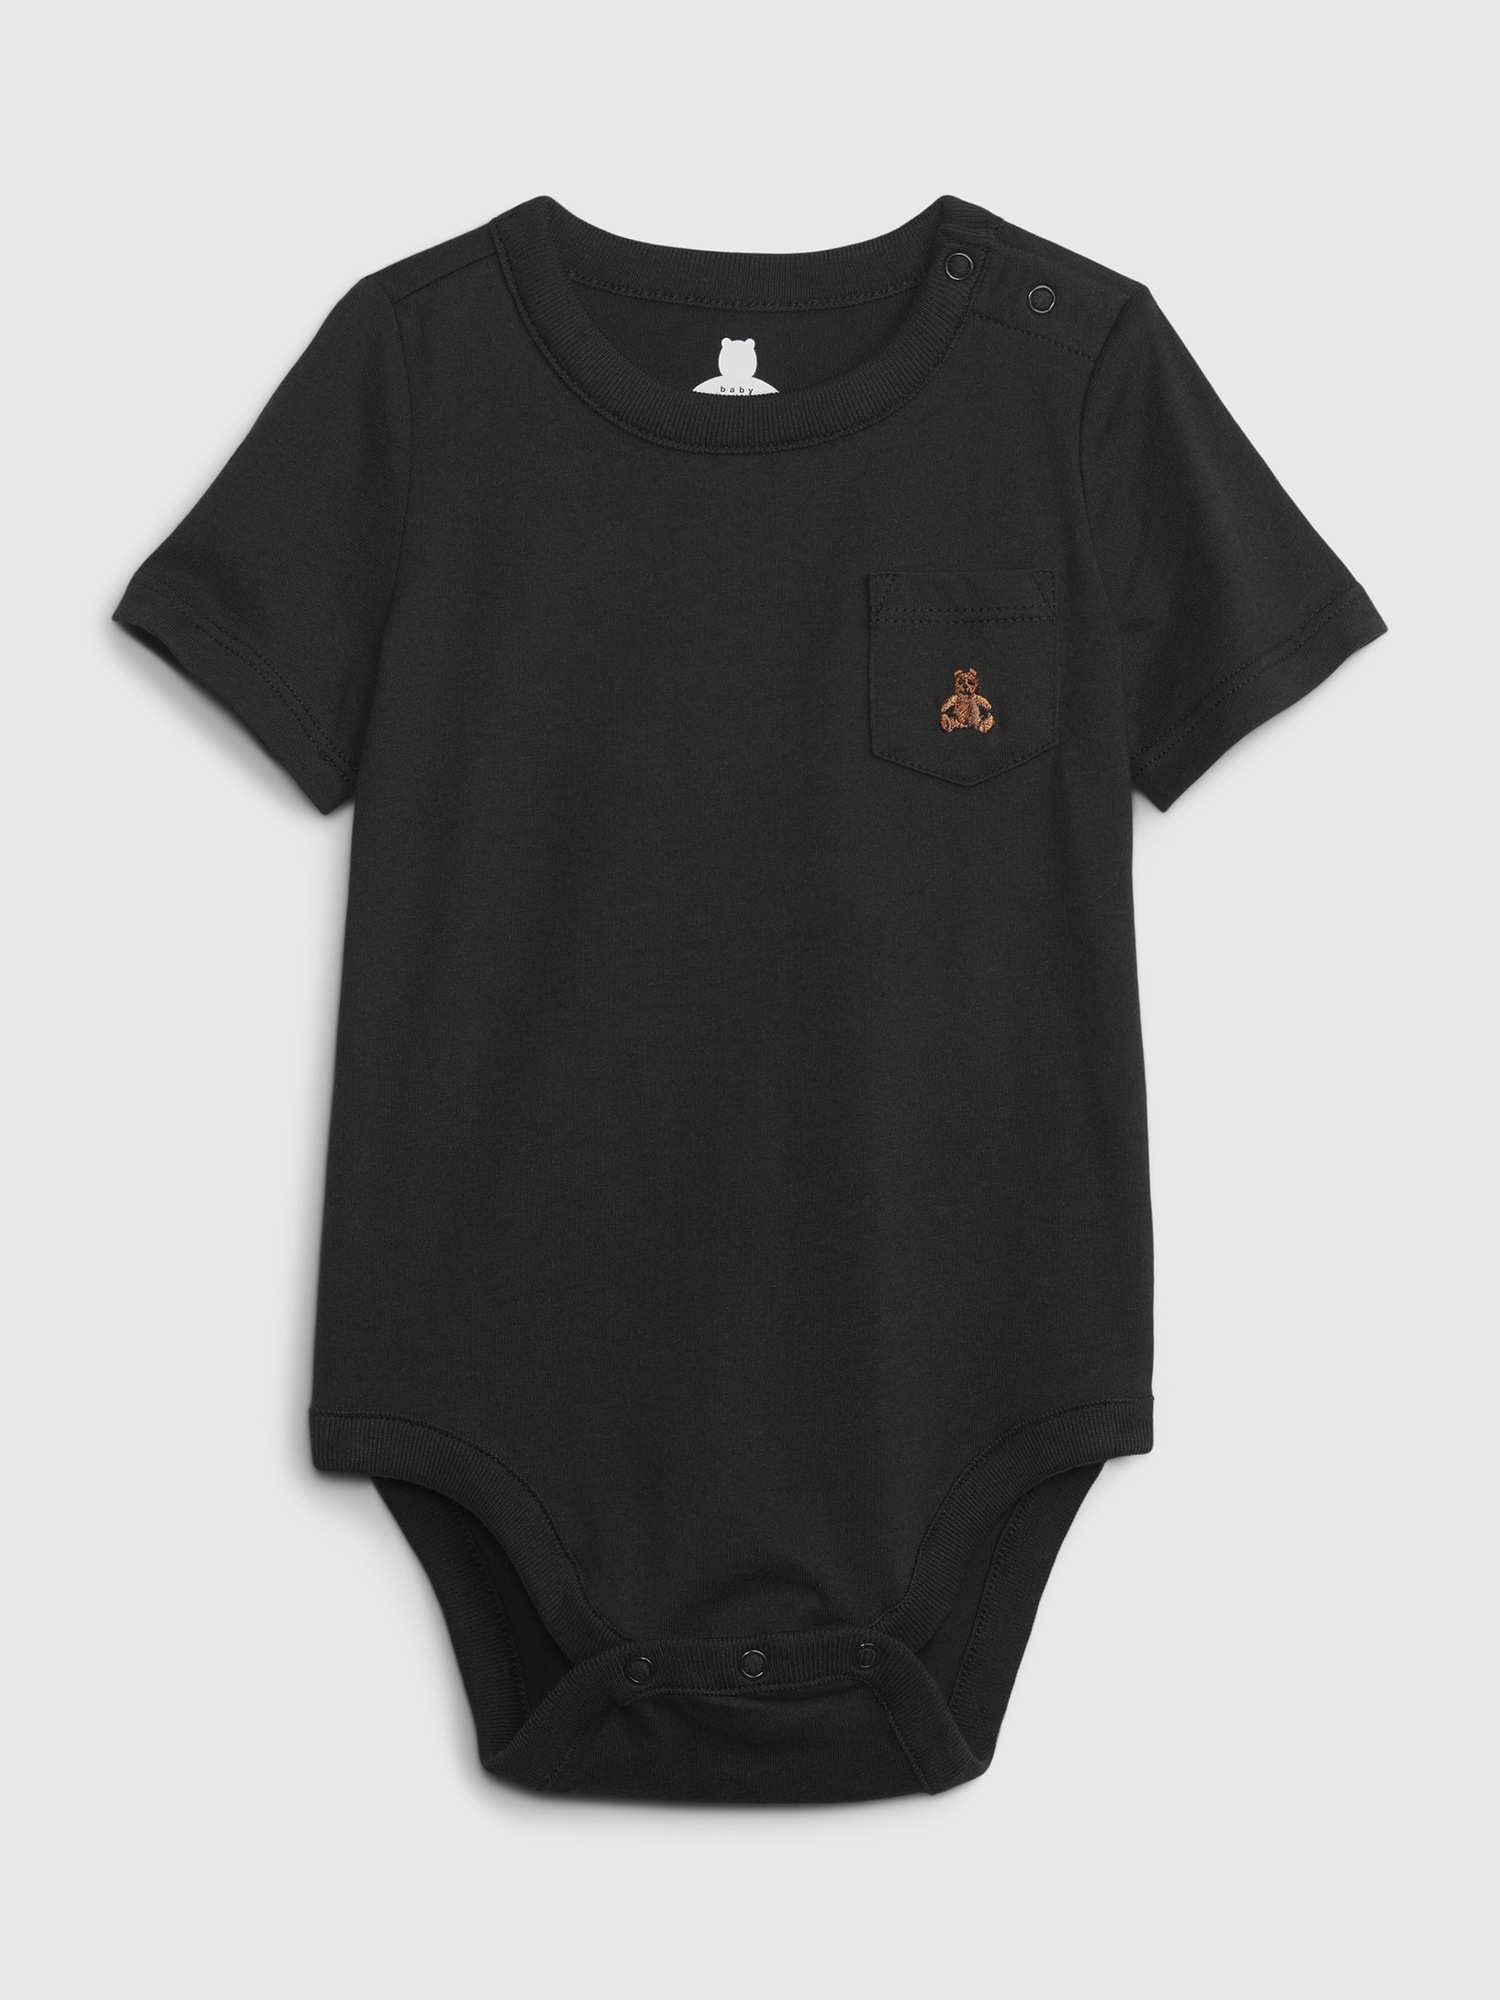 Gap Baby 100% Organic Cotton Mix and Match Pocket Bodysuit black. 1